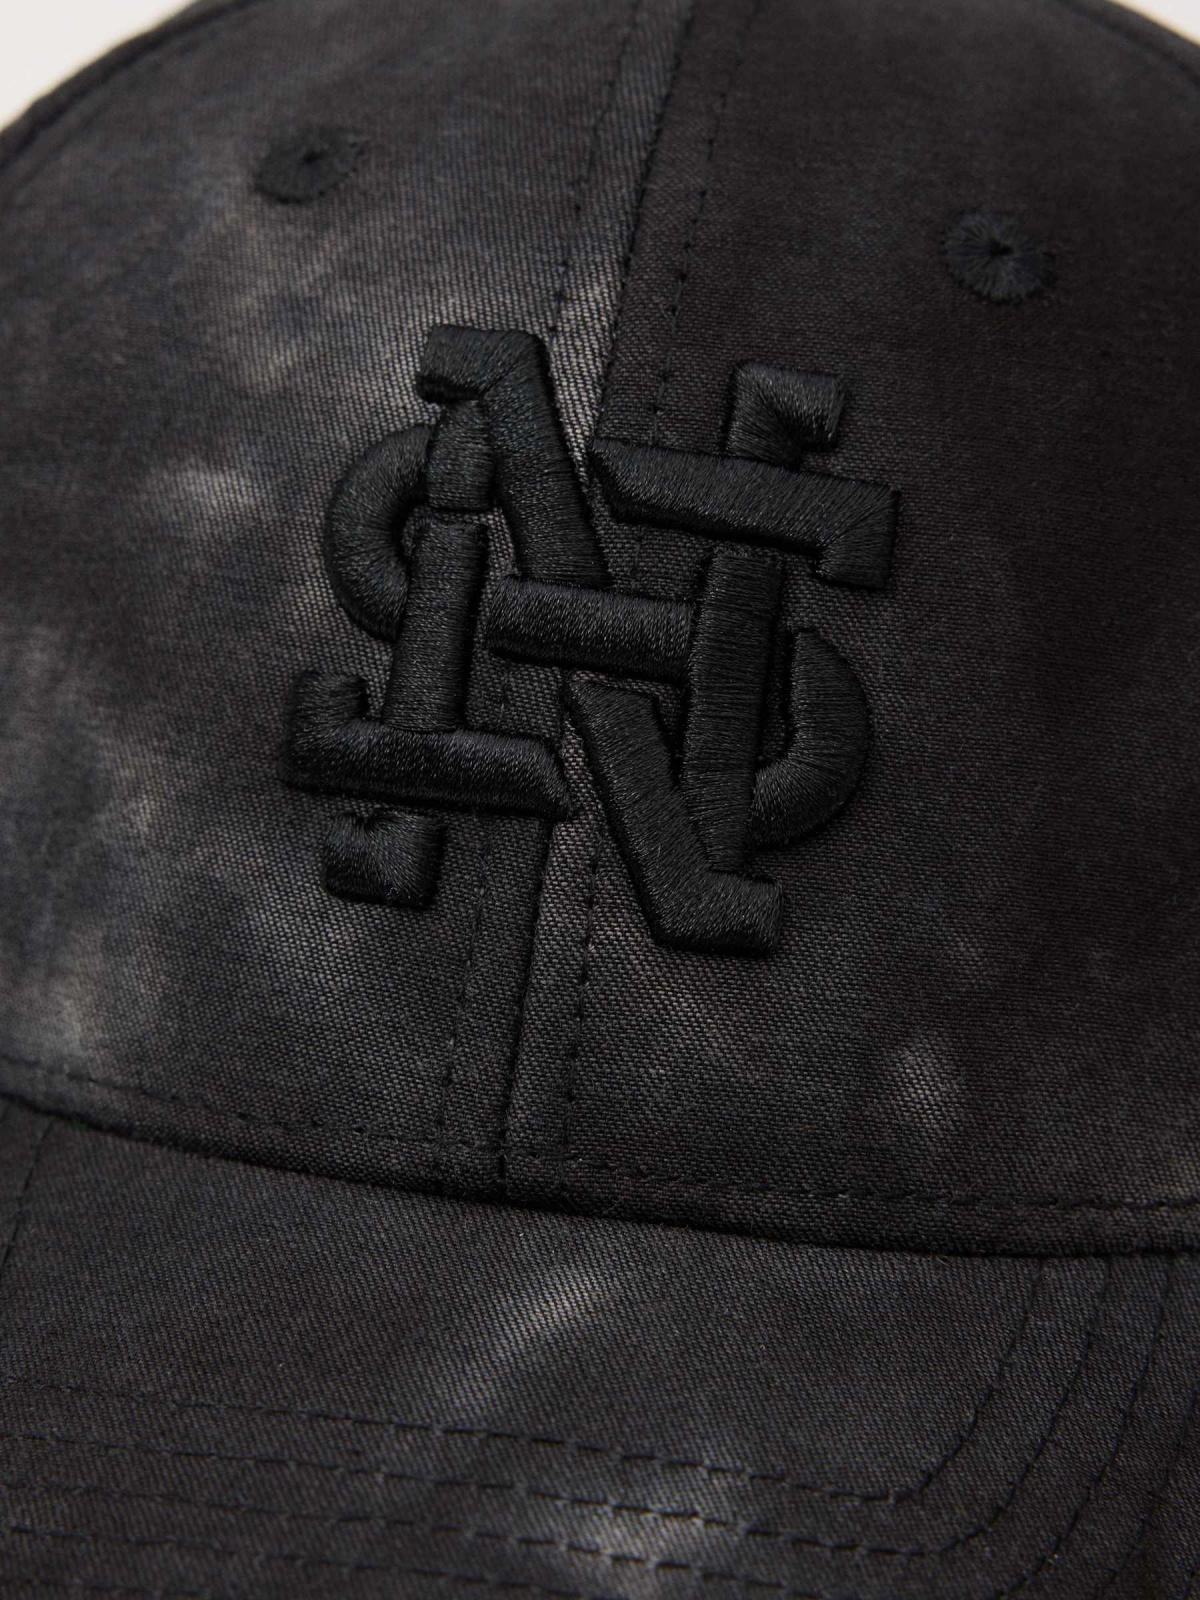 Baseball cap logo black detail view